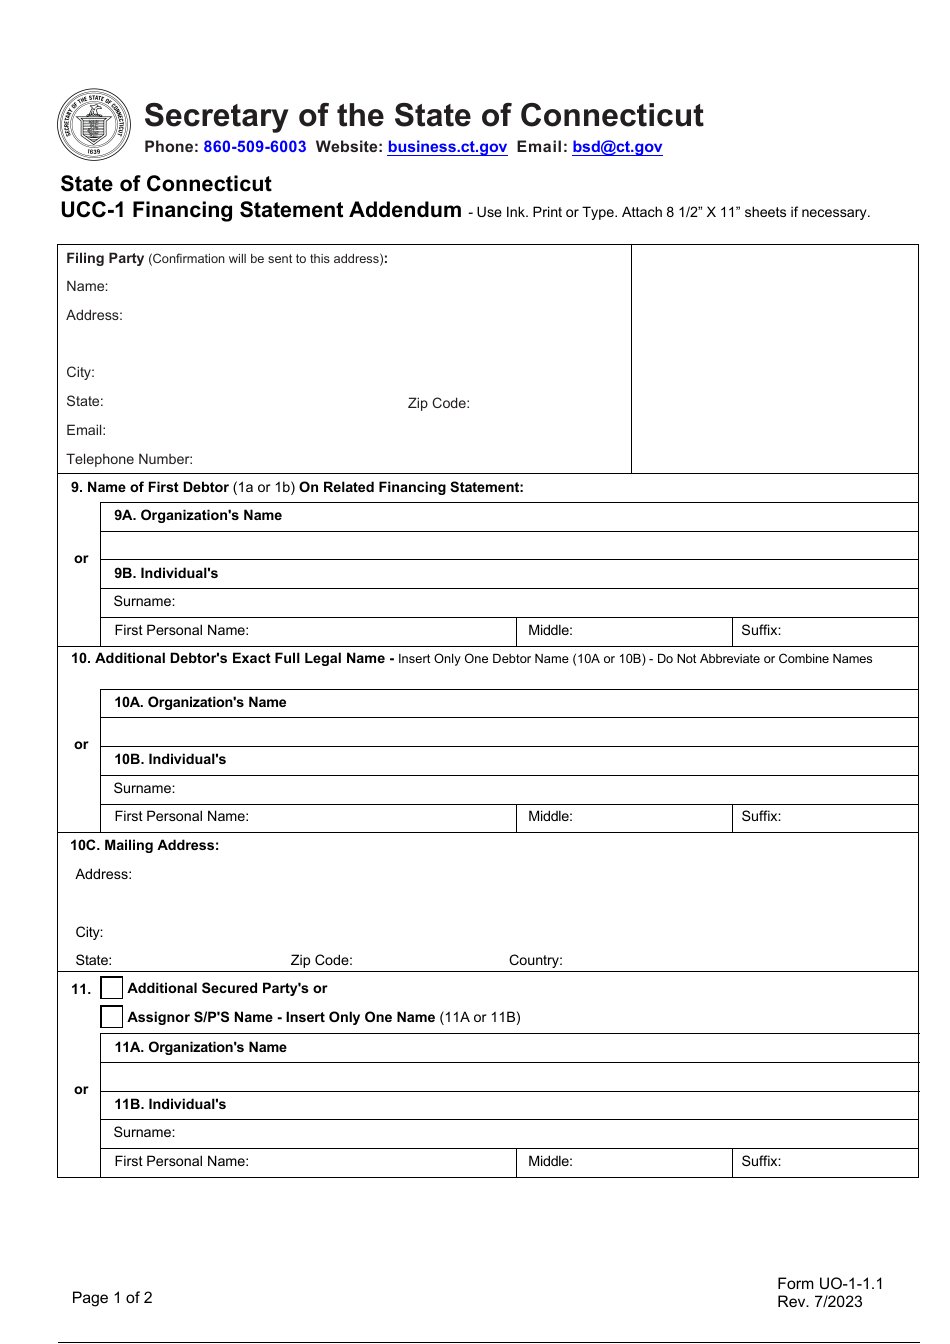 Form UCC-1AD (UO-1-1.1) Financing Statement Addendum - Connecticut, Page 1